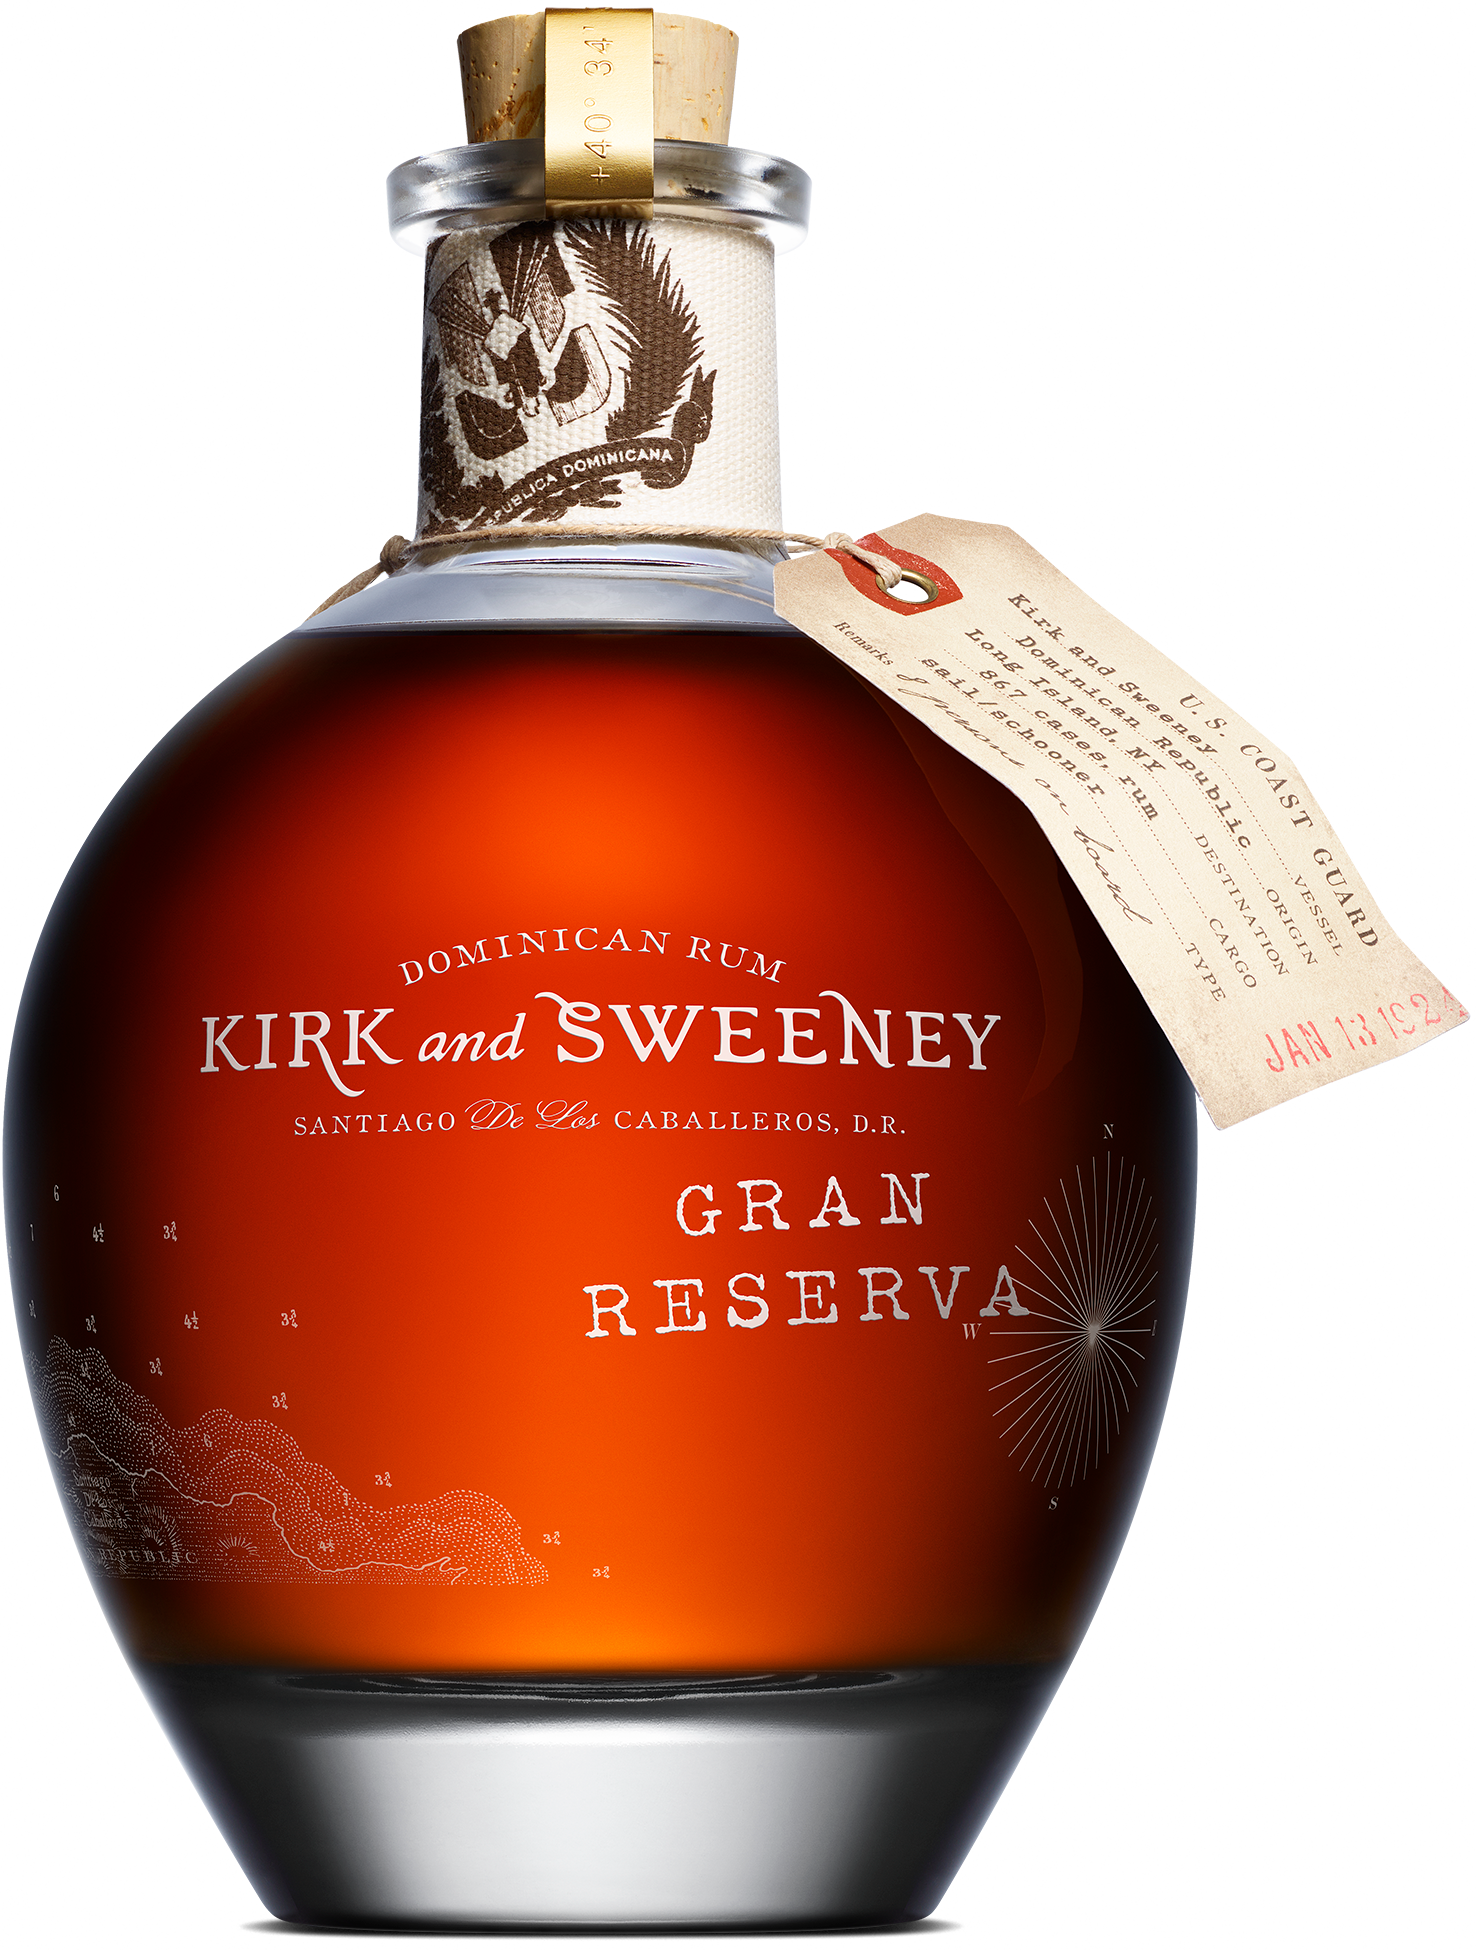 Kirk and Sweeney Gran Reserva Blended Dominican Rum 40% 0,7l